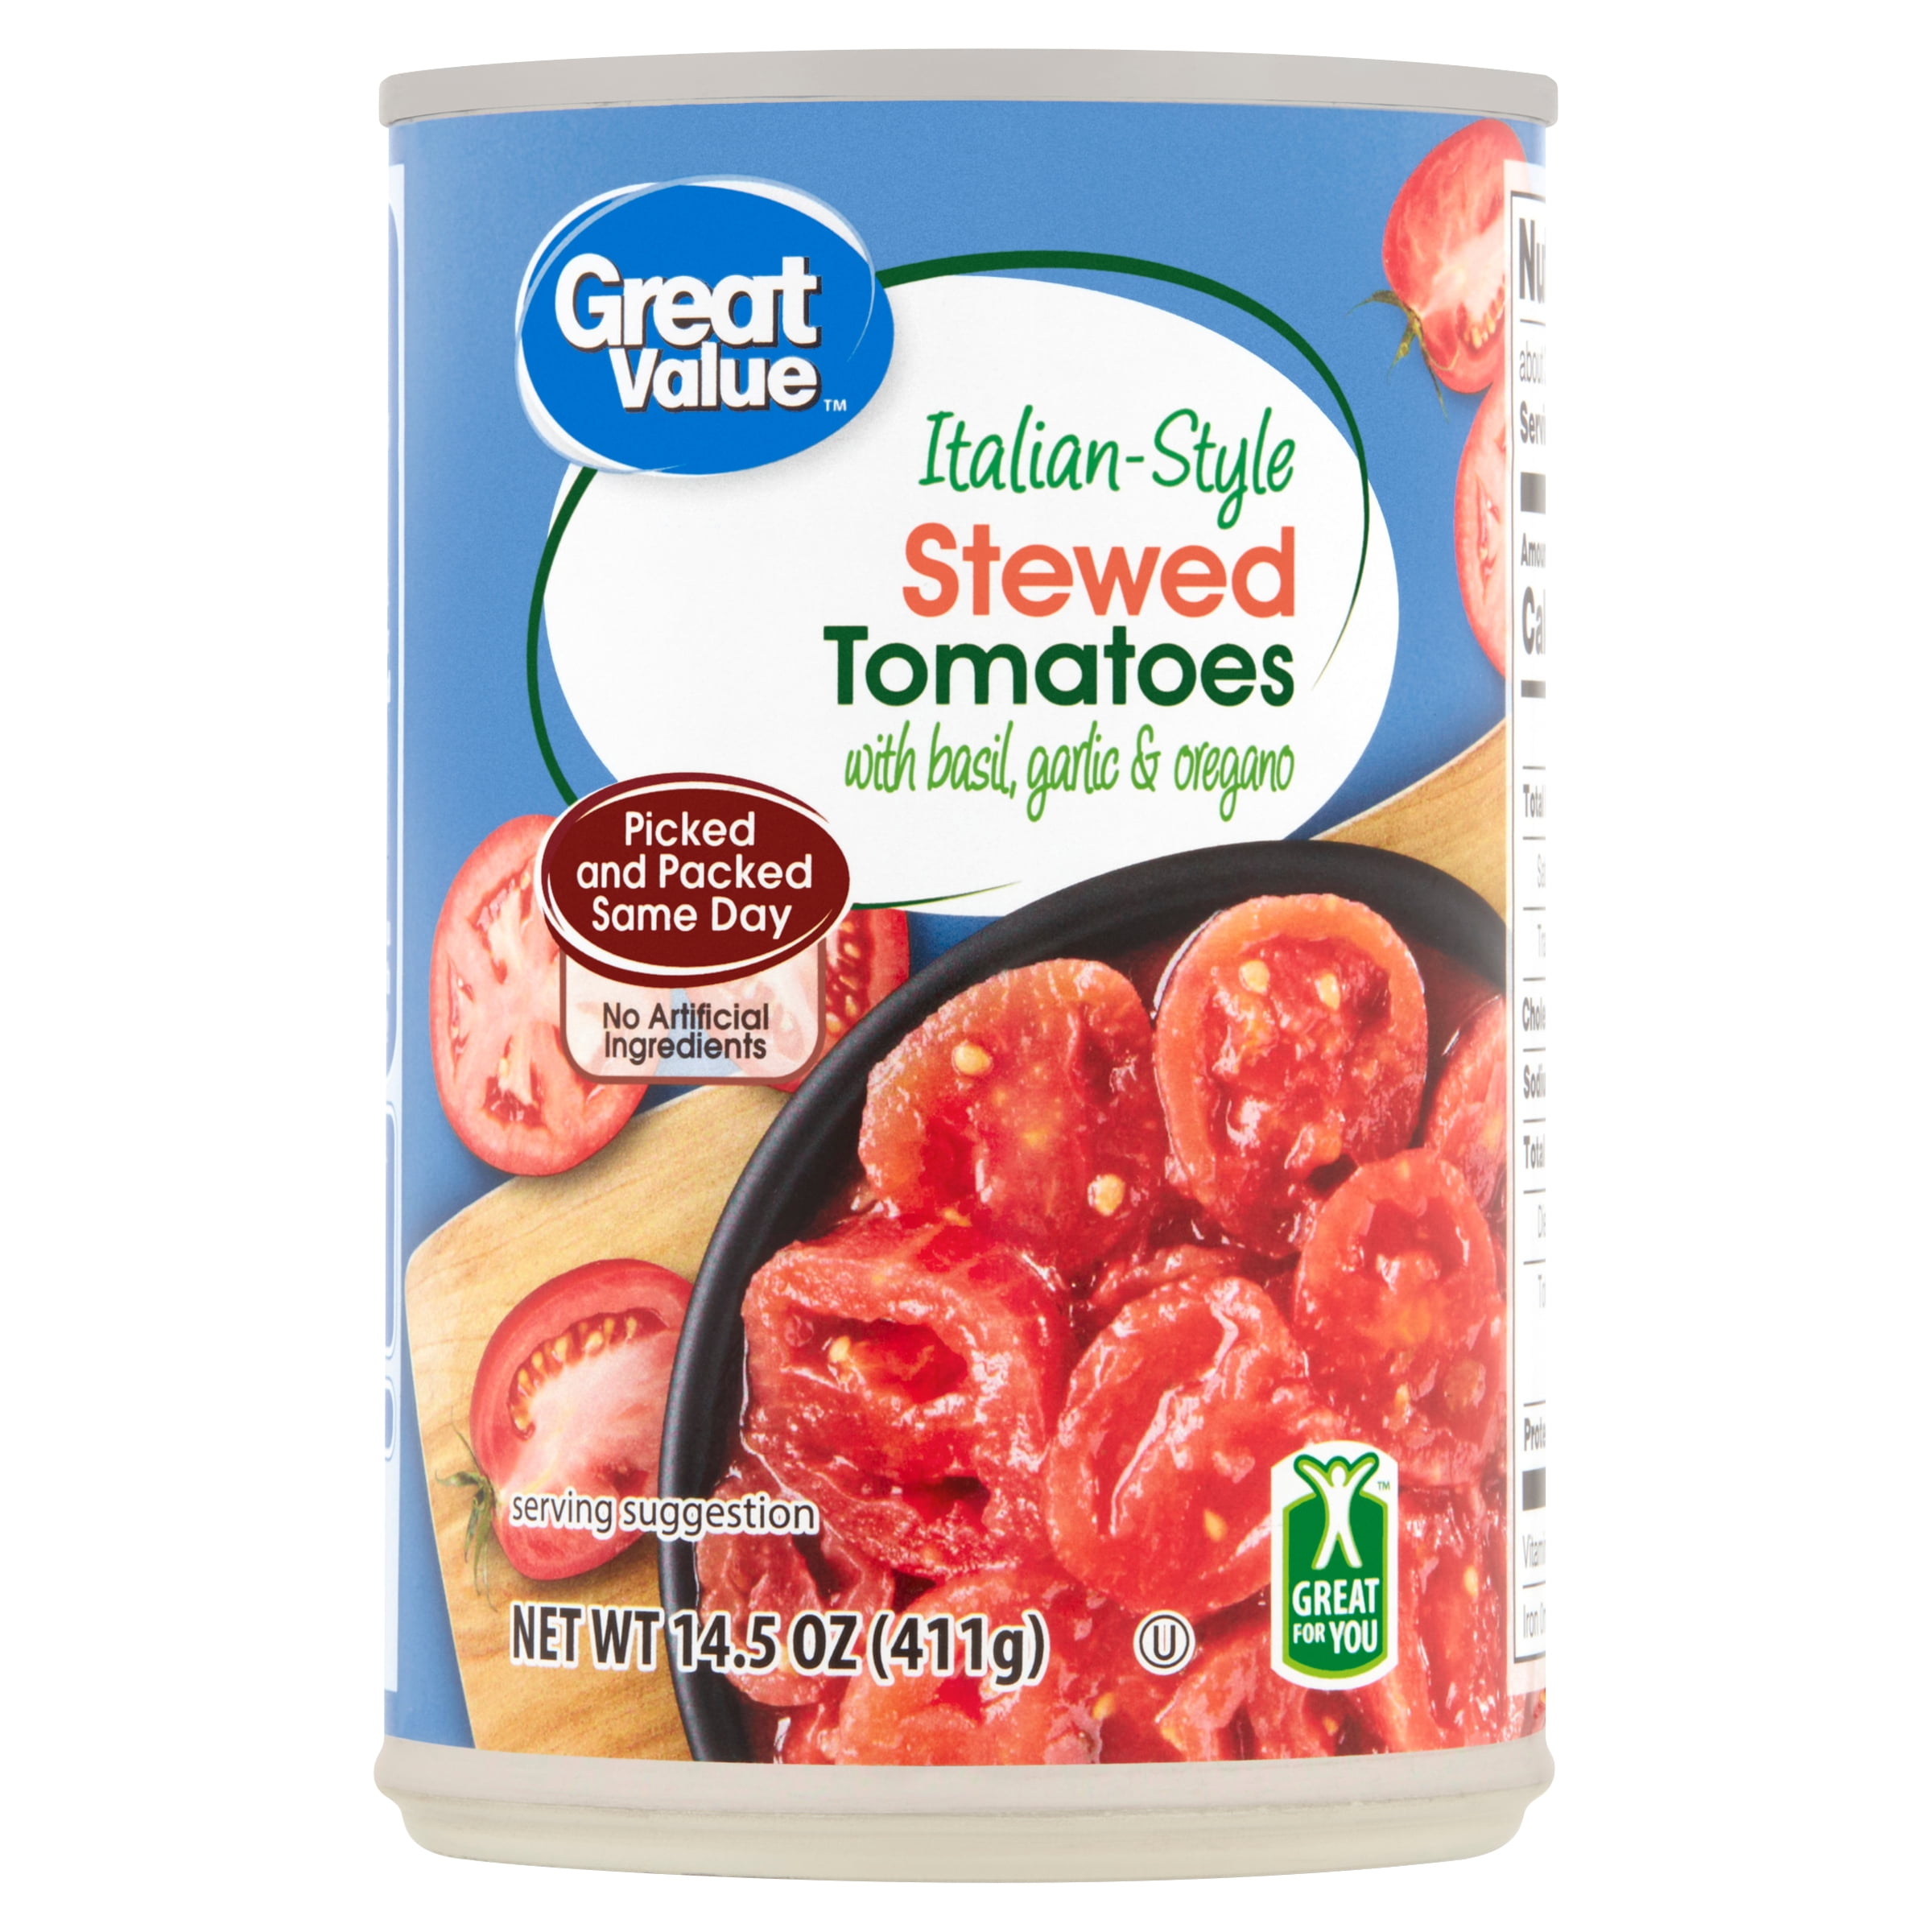 Great Value Italian-Style Stewed Tomatoes with Basil, Garlic & Oregano, 14.5 Oz